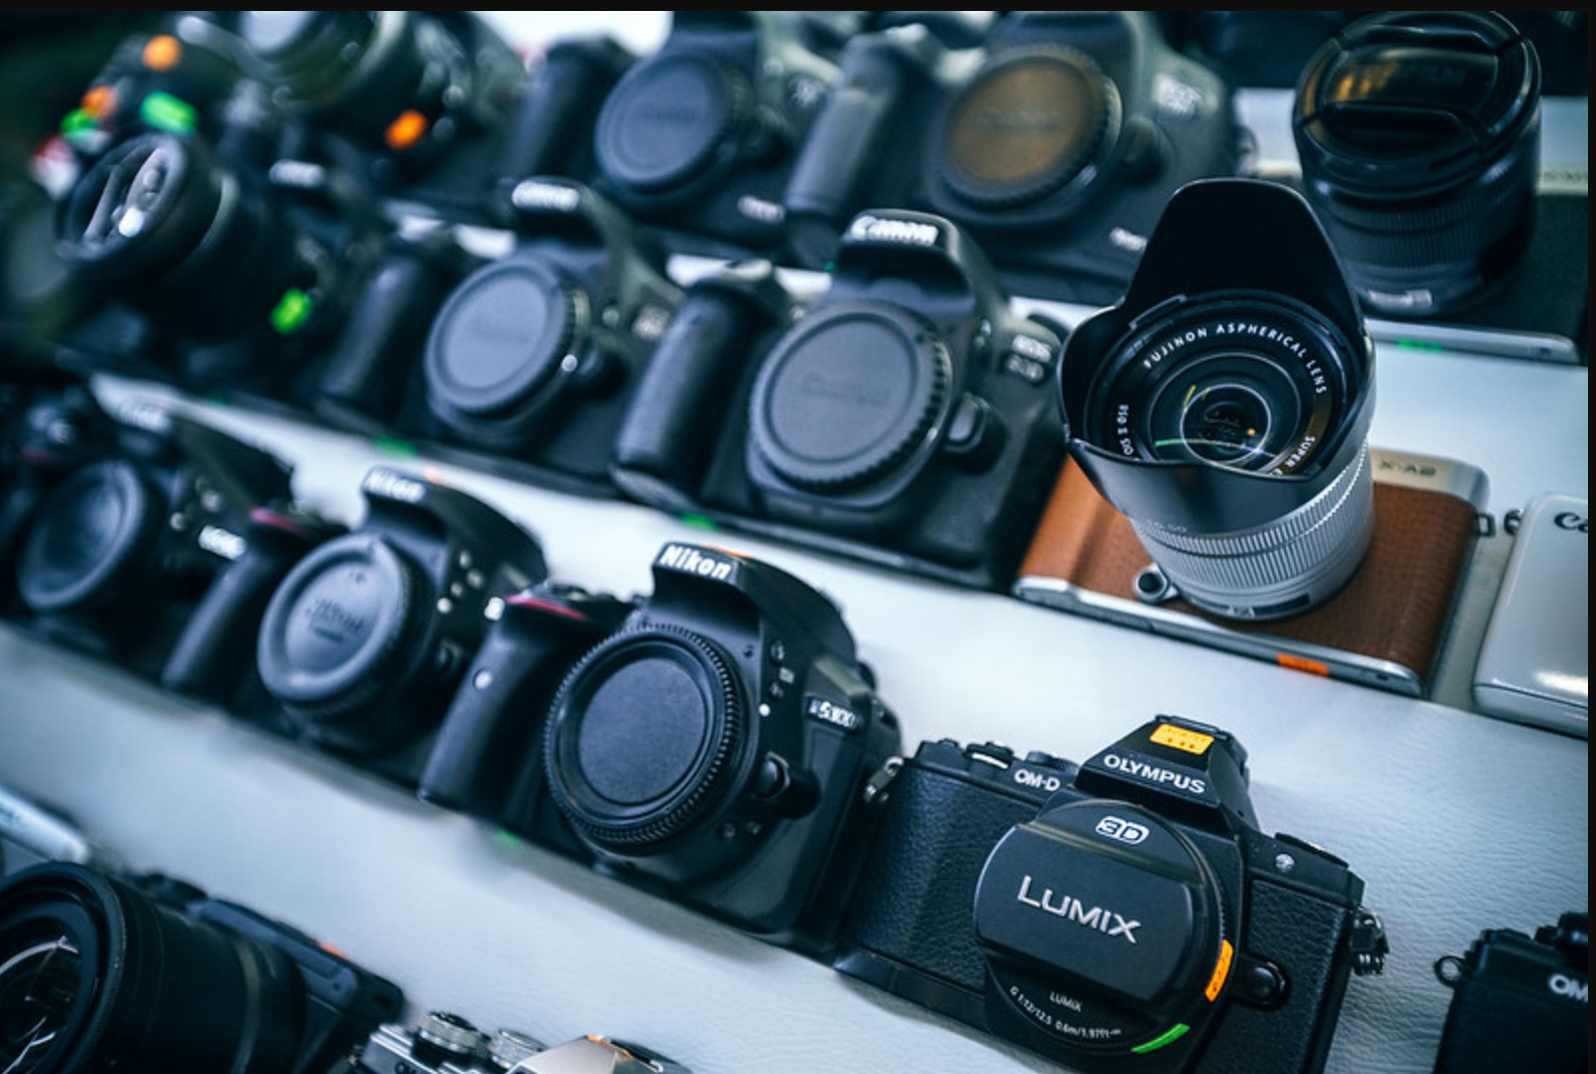 Camera bodies of different brands - Canon Nikon Sony Panasonic 